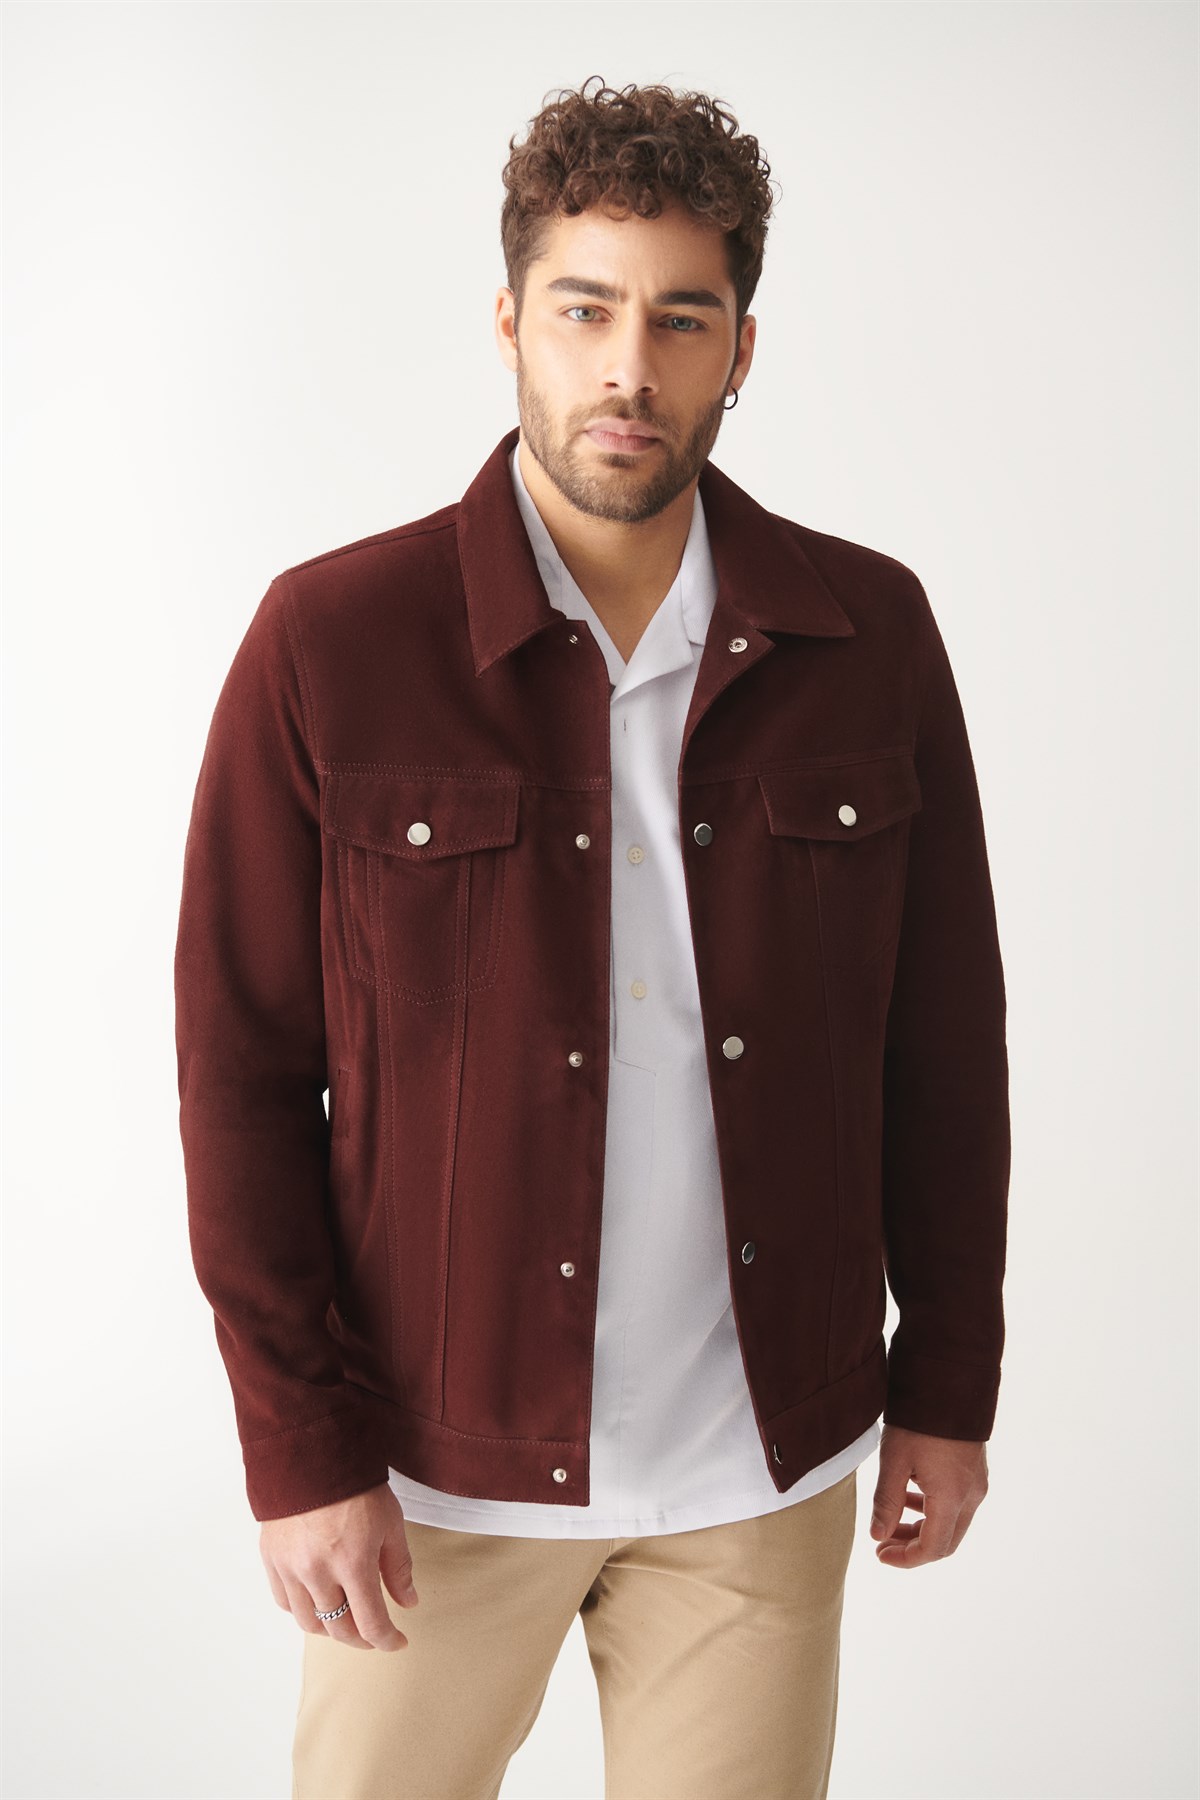 BORIS Claret Red Suede Leather Jacket | Men's Suede Leather Jacket